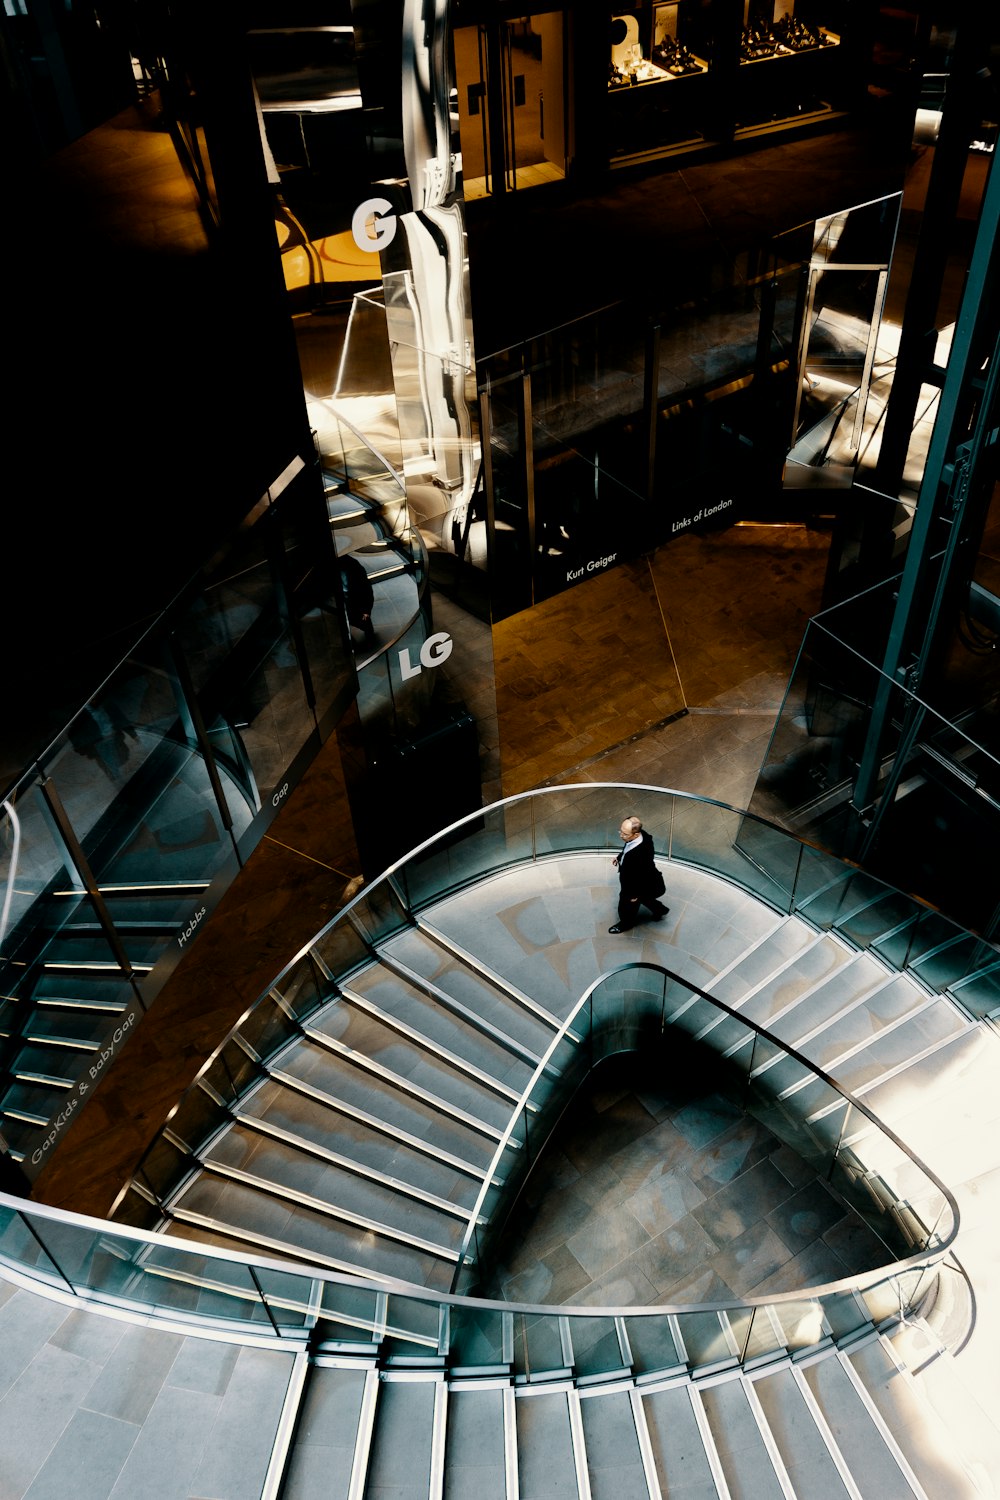 man wearing black shirt on the stairs